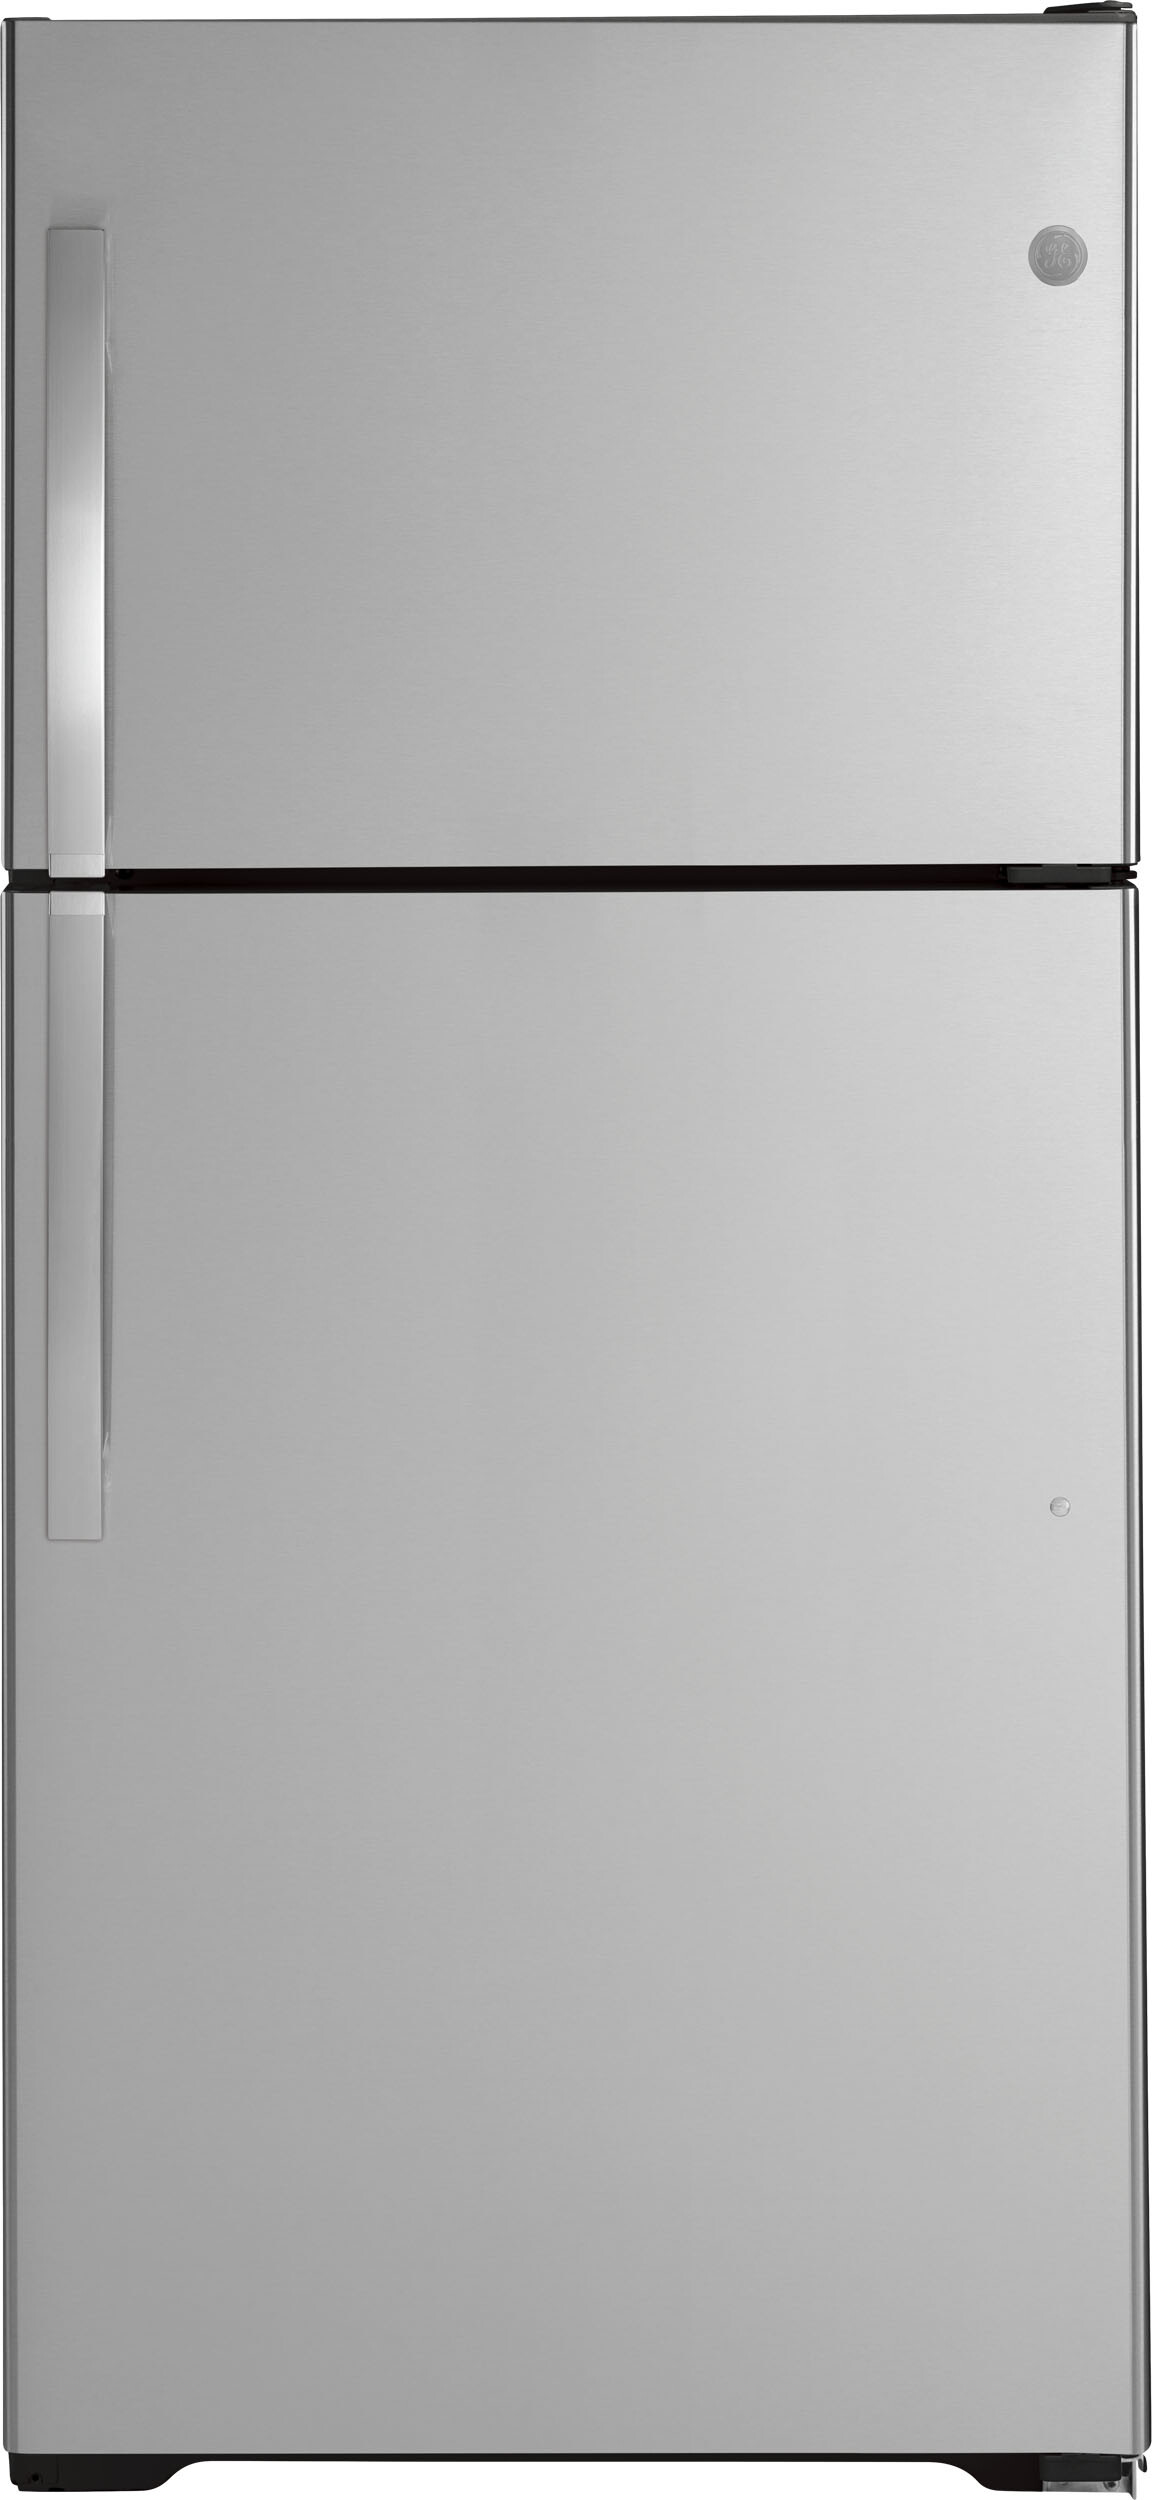 GE 30 Inch 30 Top Freezer Refrigerator GIE19JSNRSS